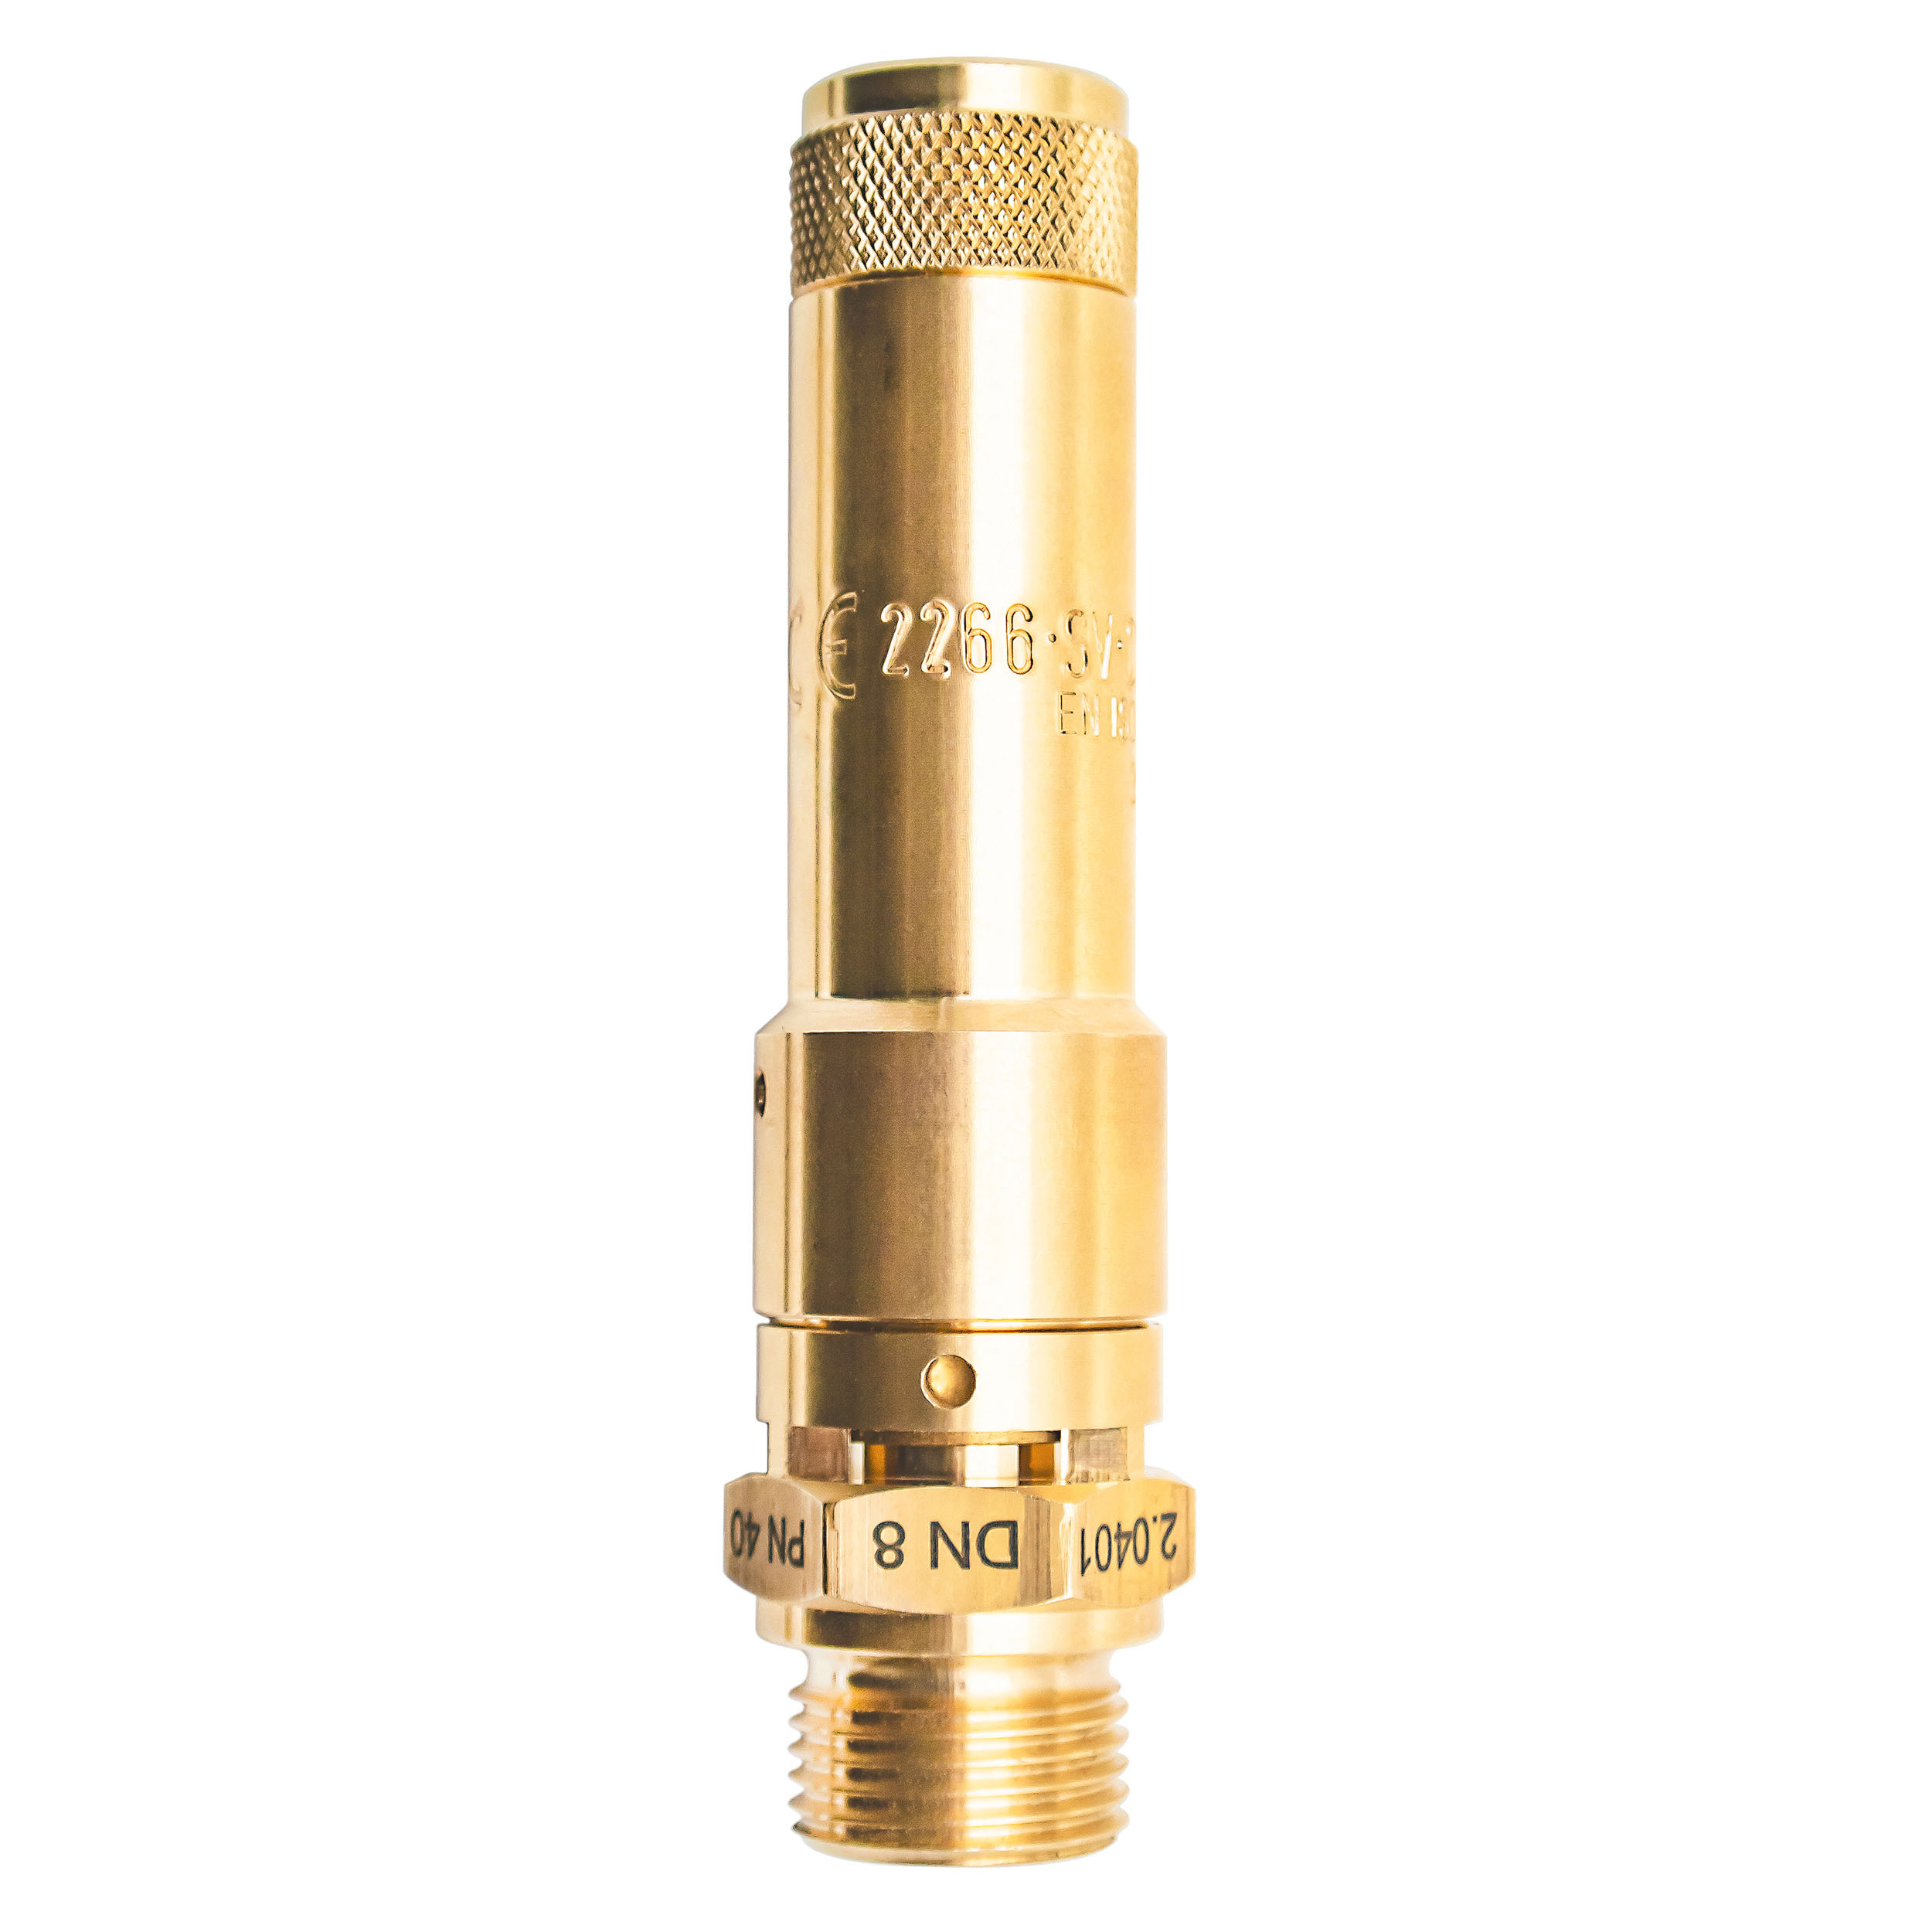 Component-tested safety valve DN 8, G¼, pressure: 5.1-7 bar